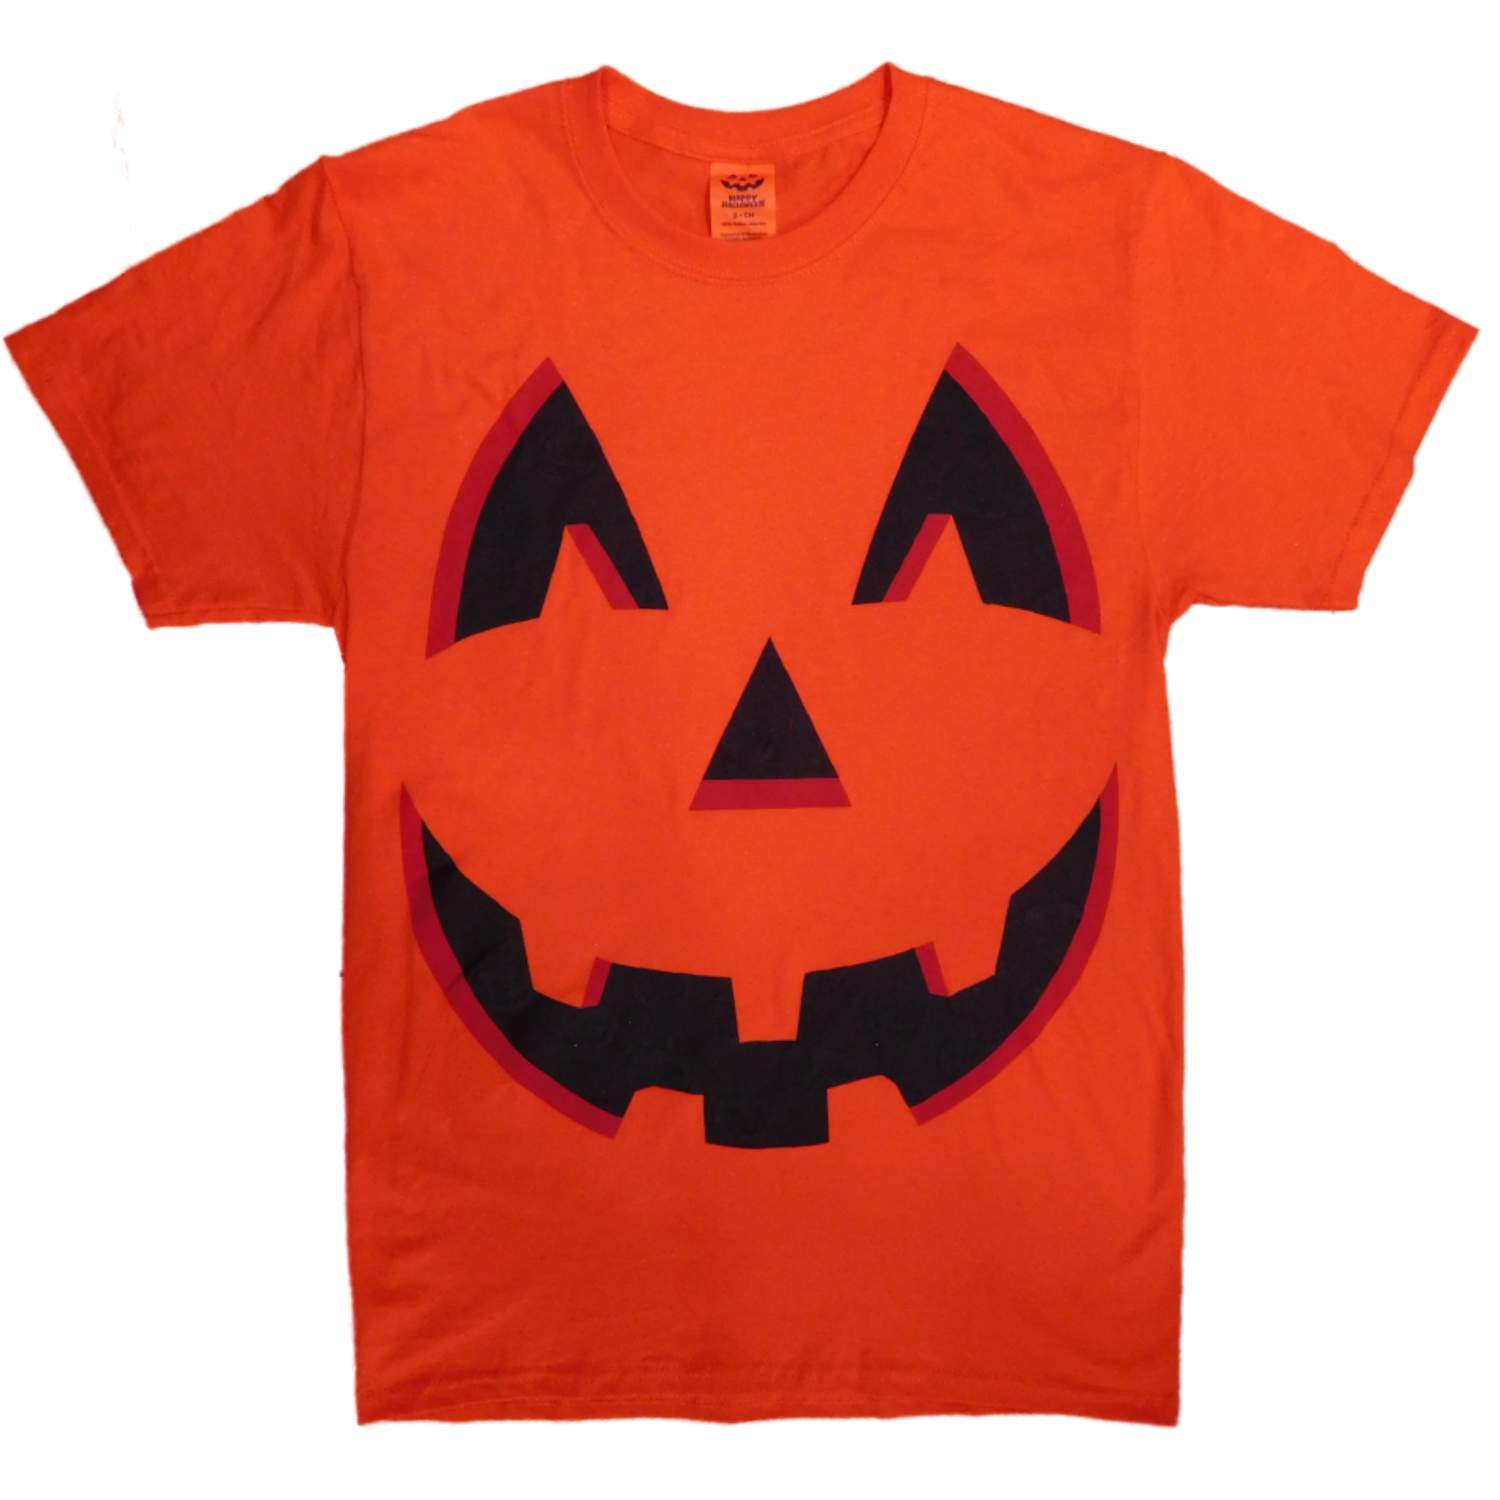 Happy Halloween Halloween Mens Orange Jack-O-Lantern Pumpkin Costume T-Shirt